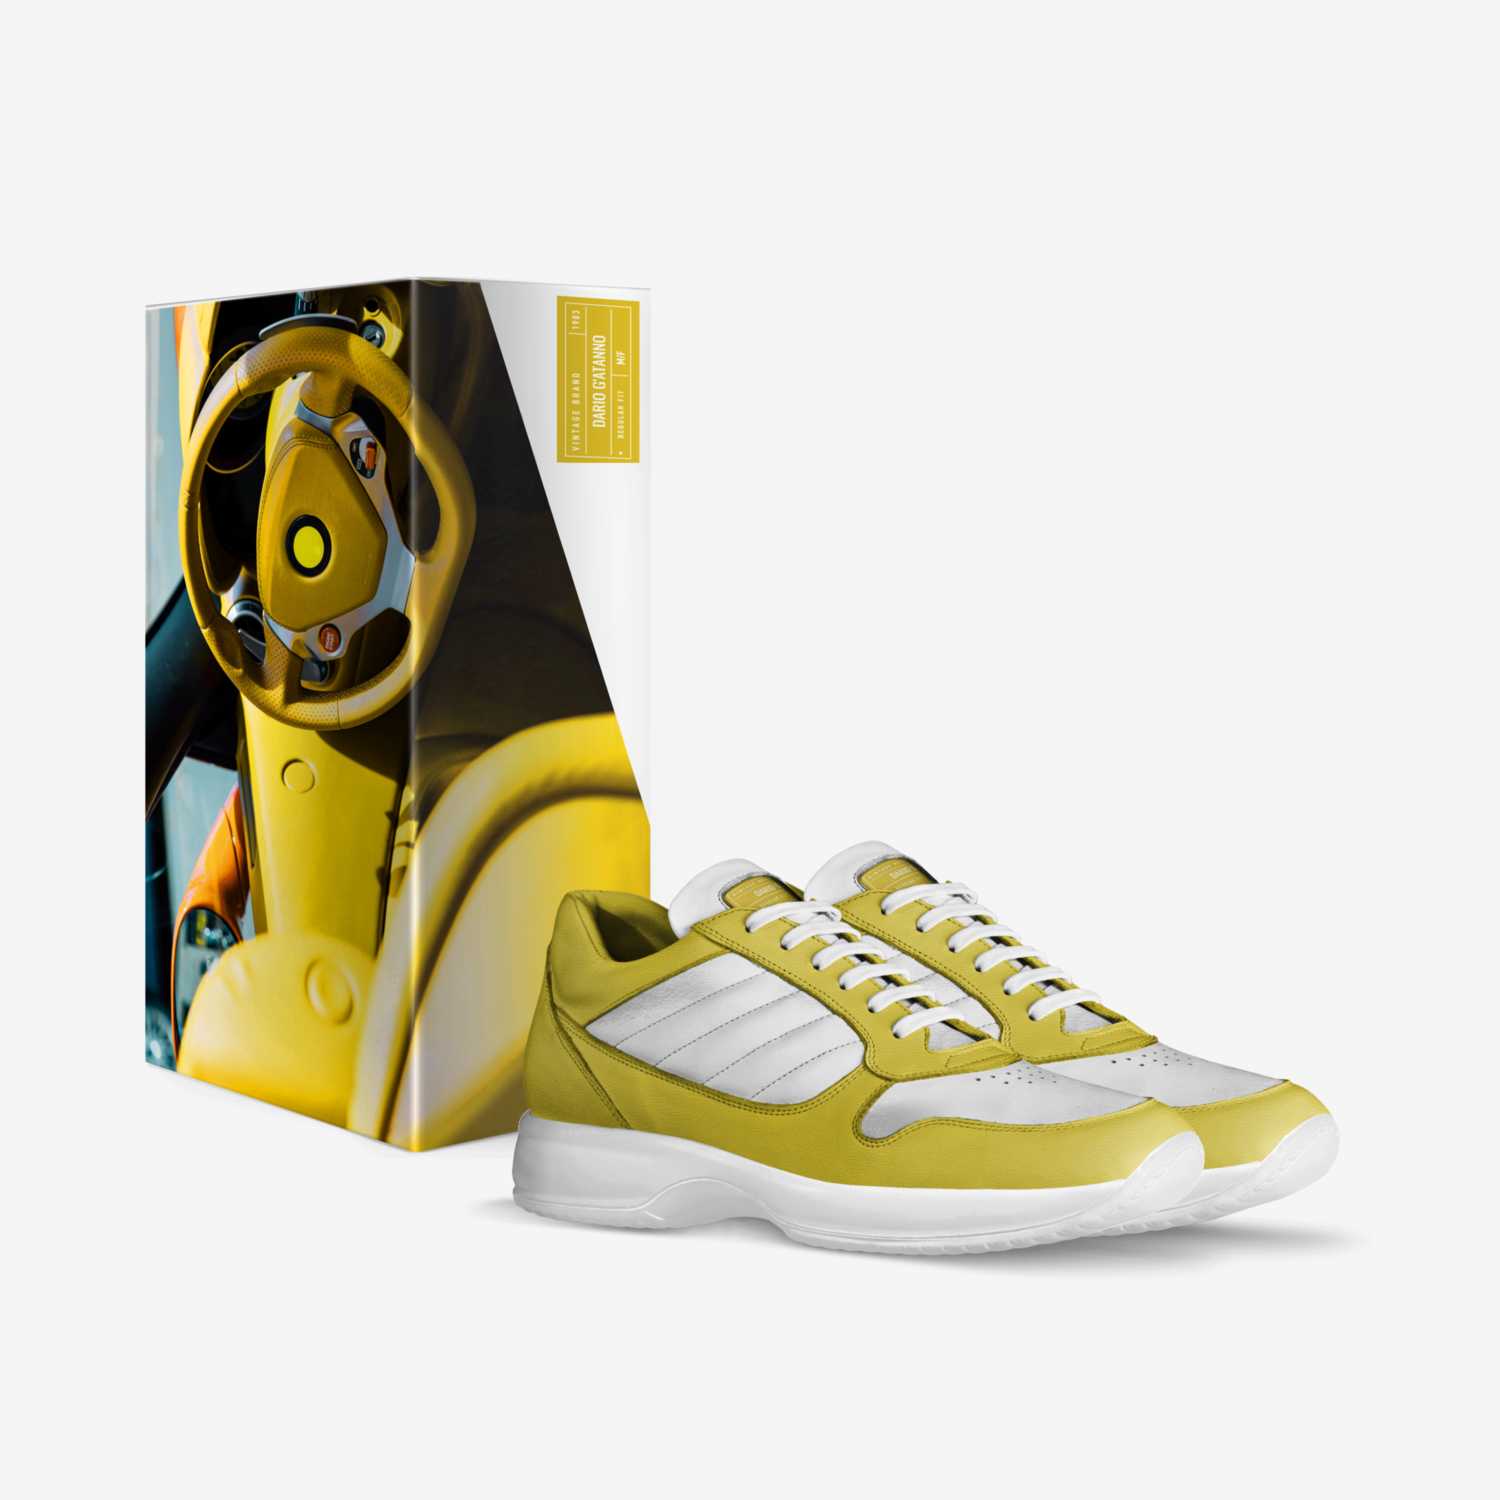 Dario G'Atanno custom made in Italy shoes by Darel Wesley | Box view